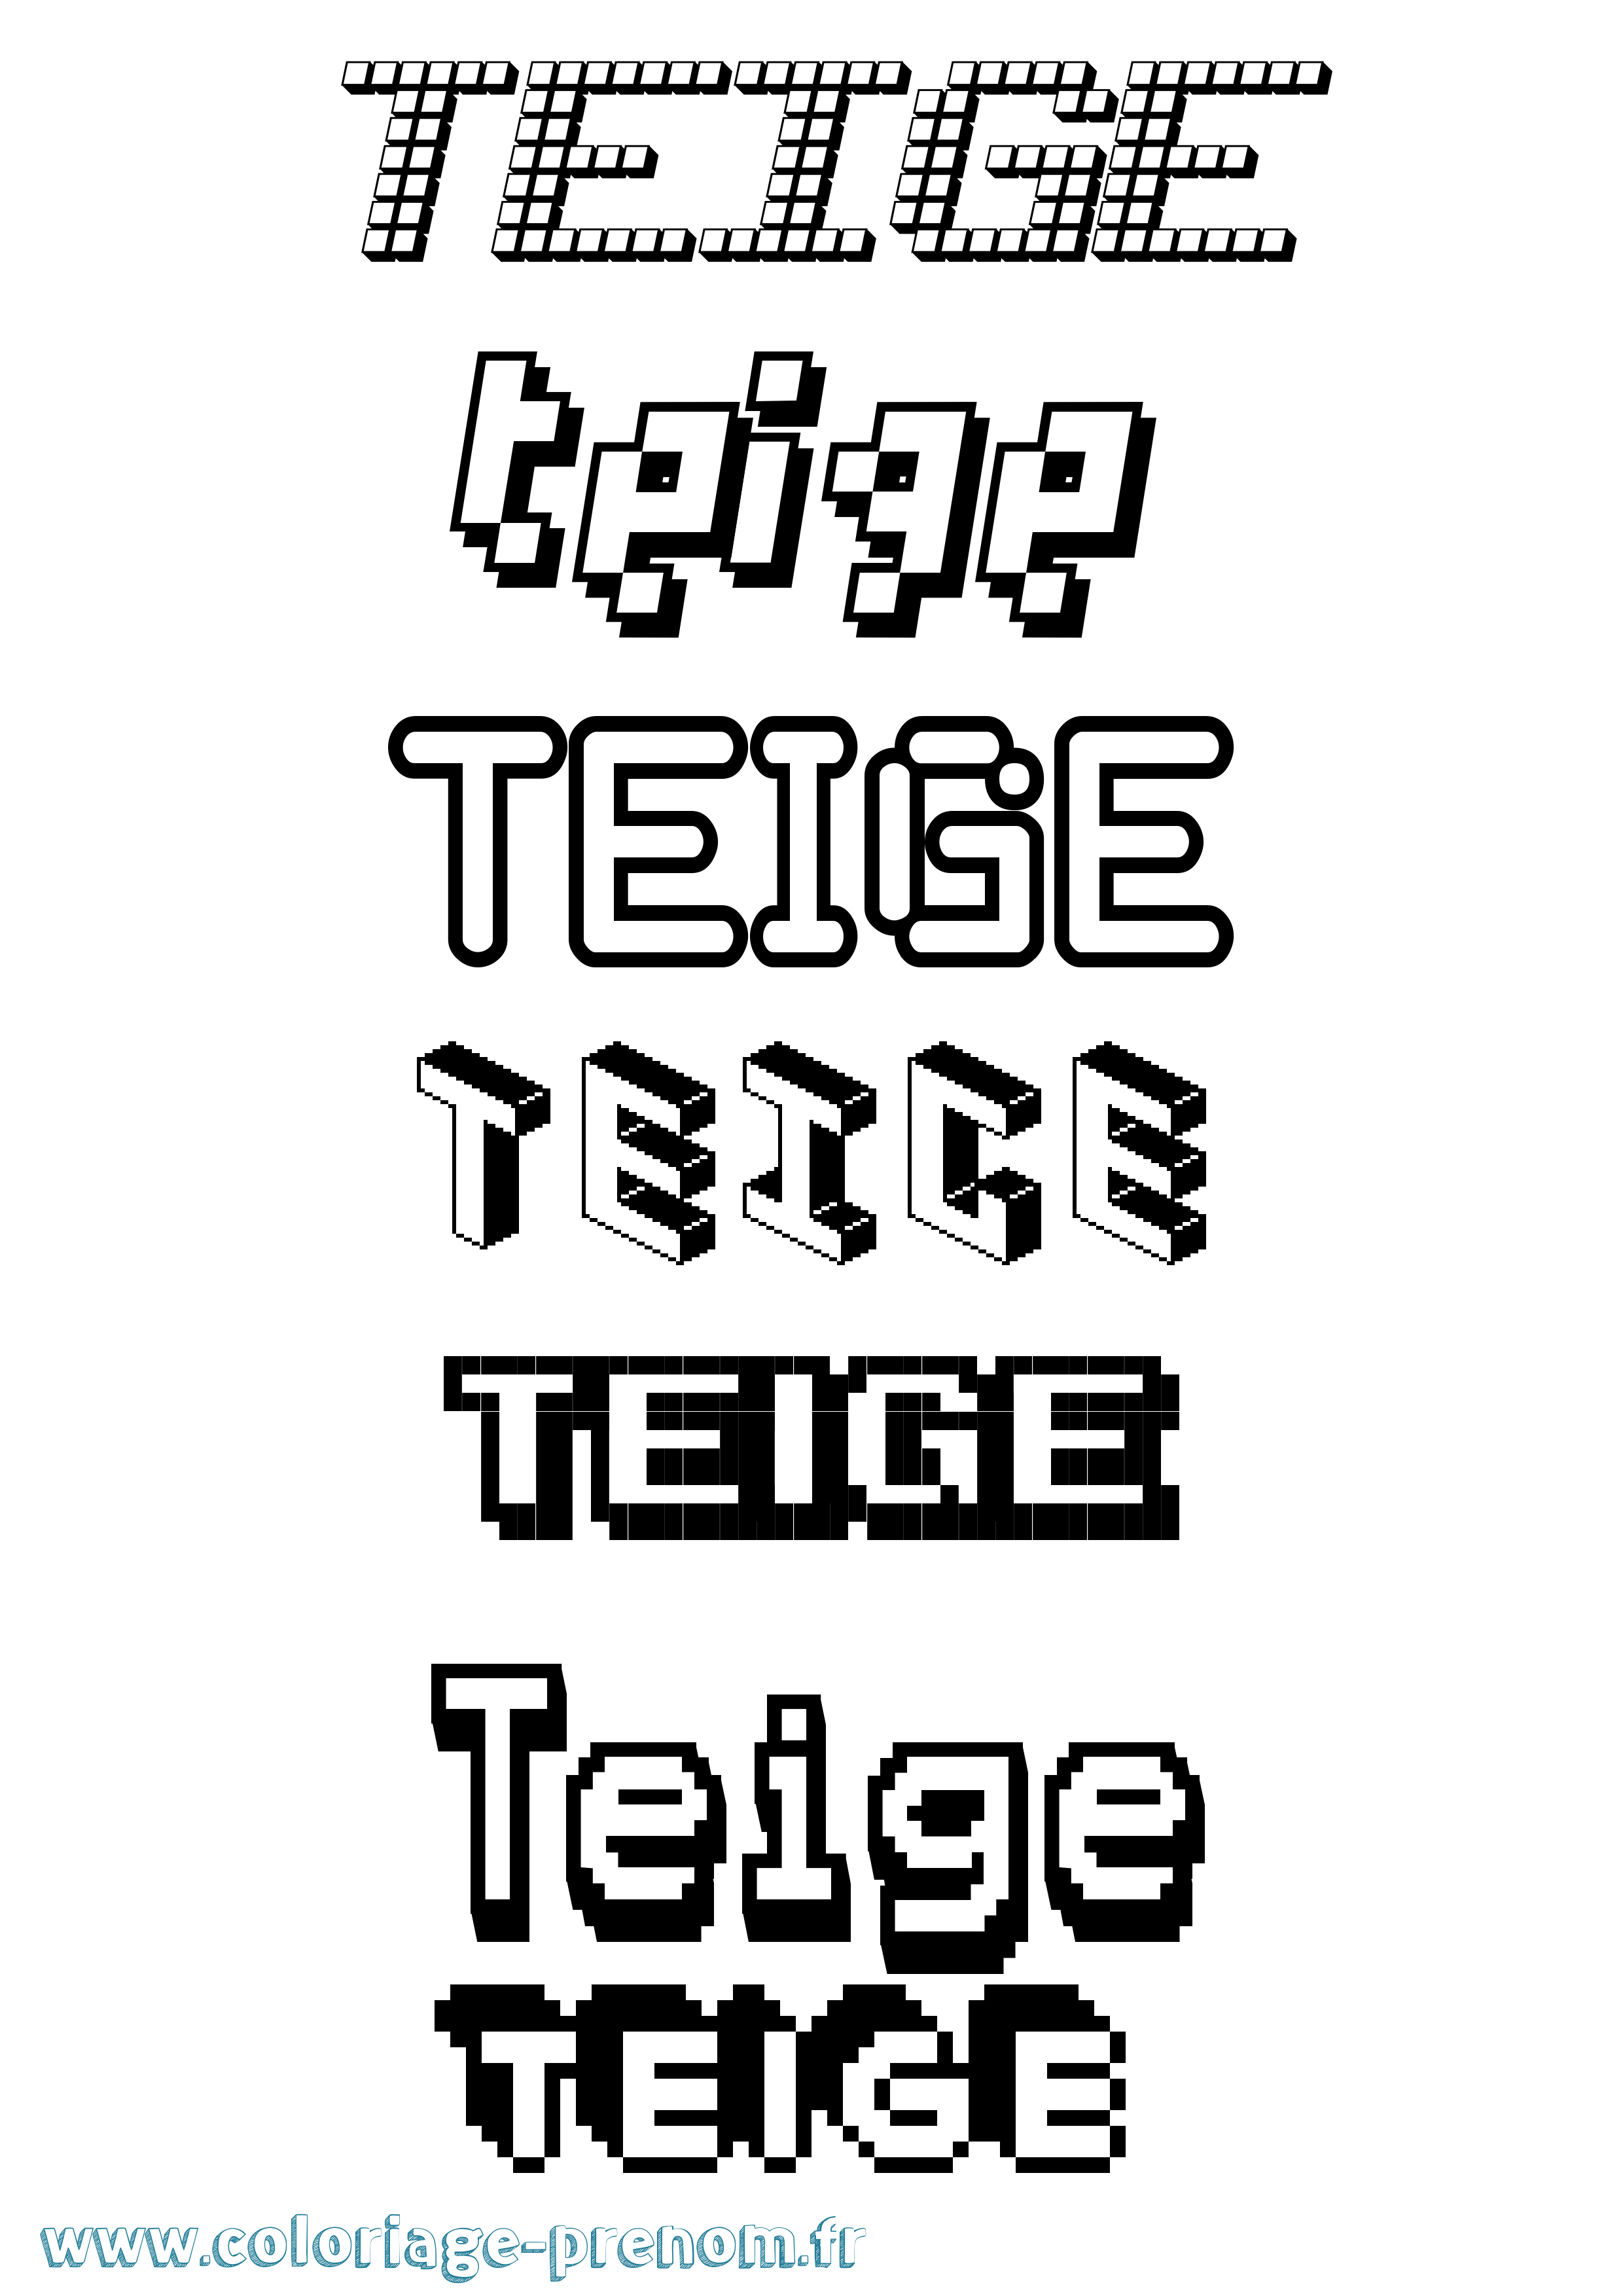 Coloriage prénom Teige Pixel